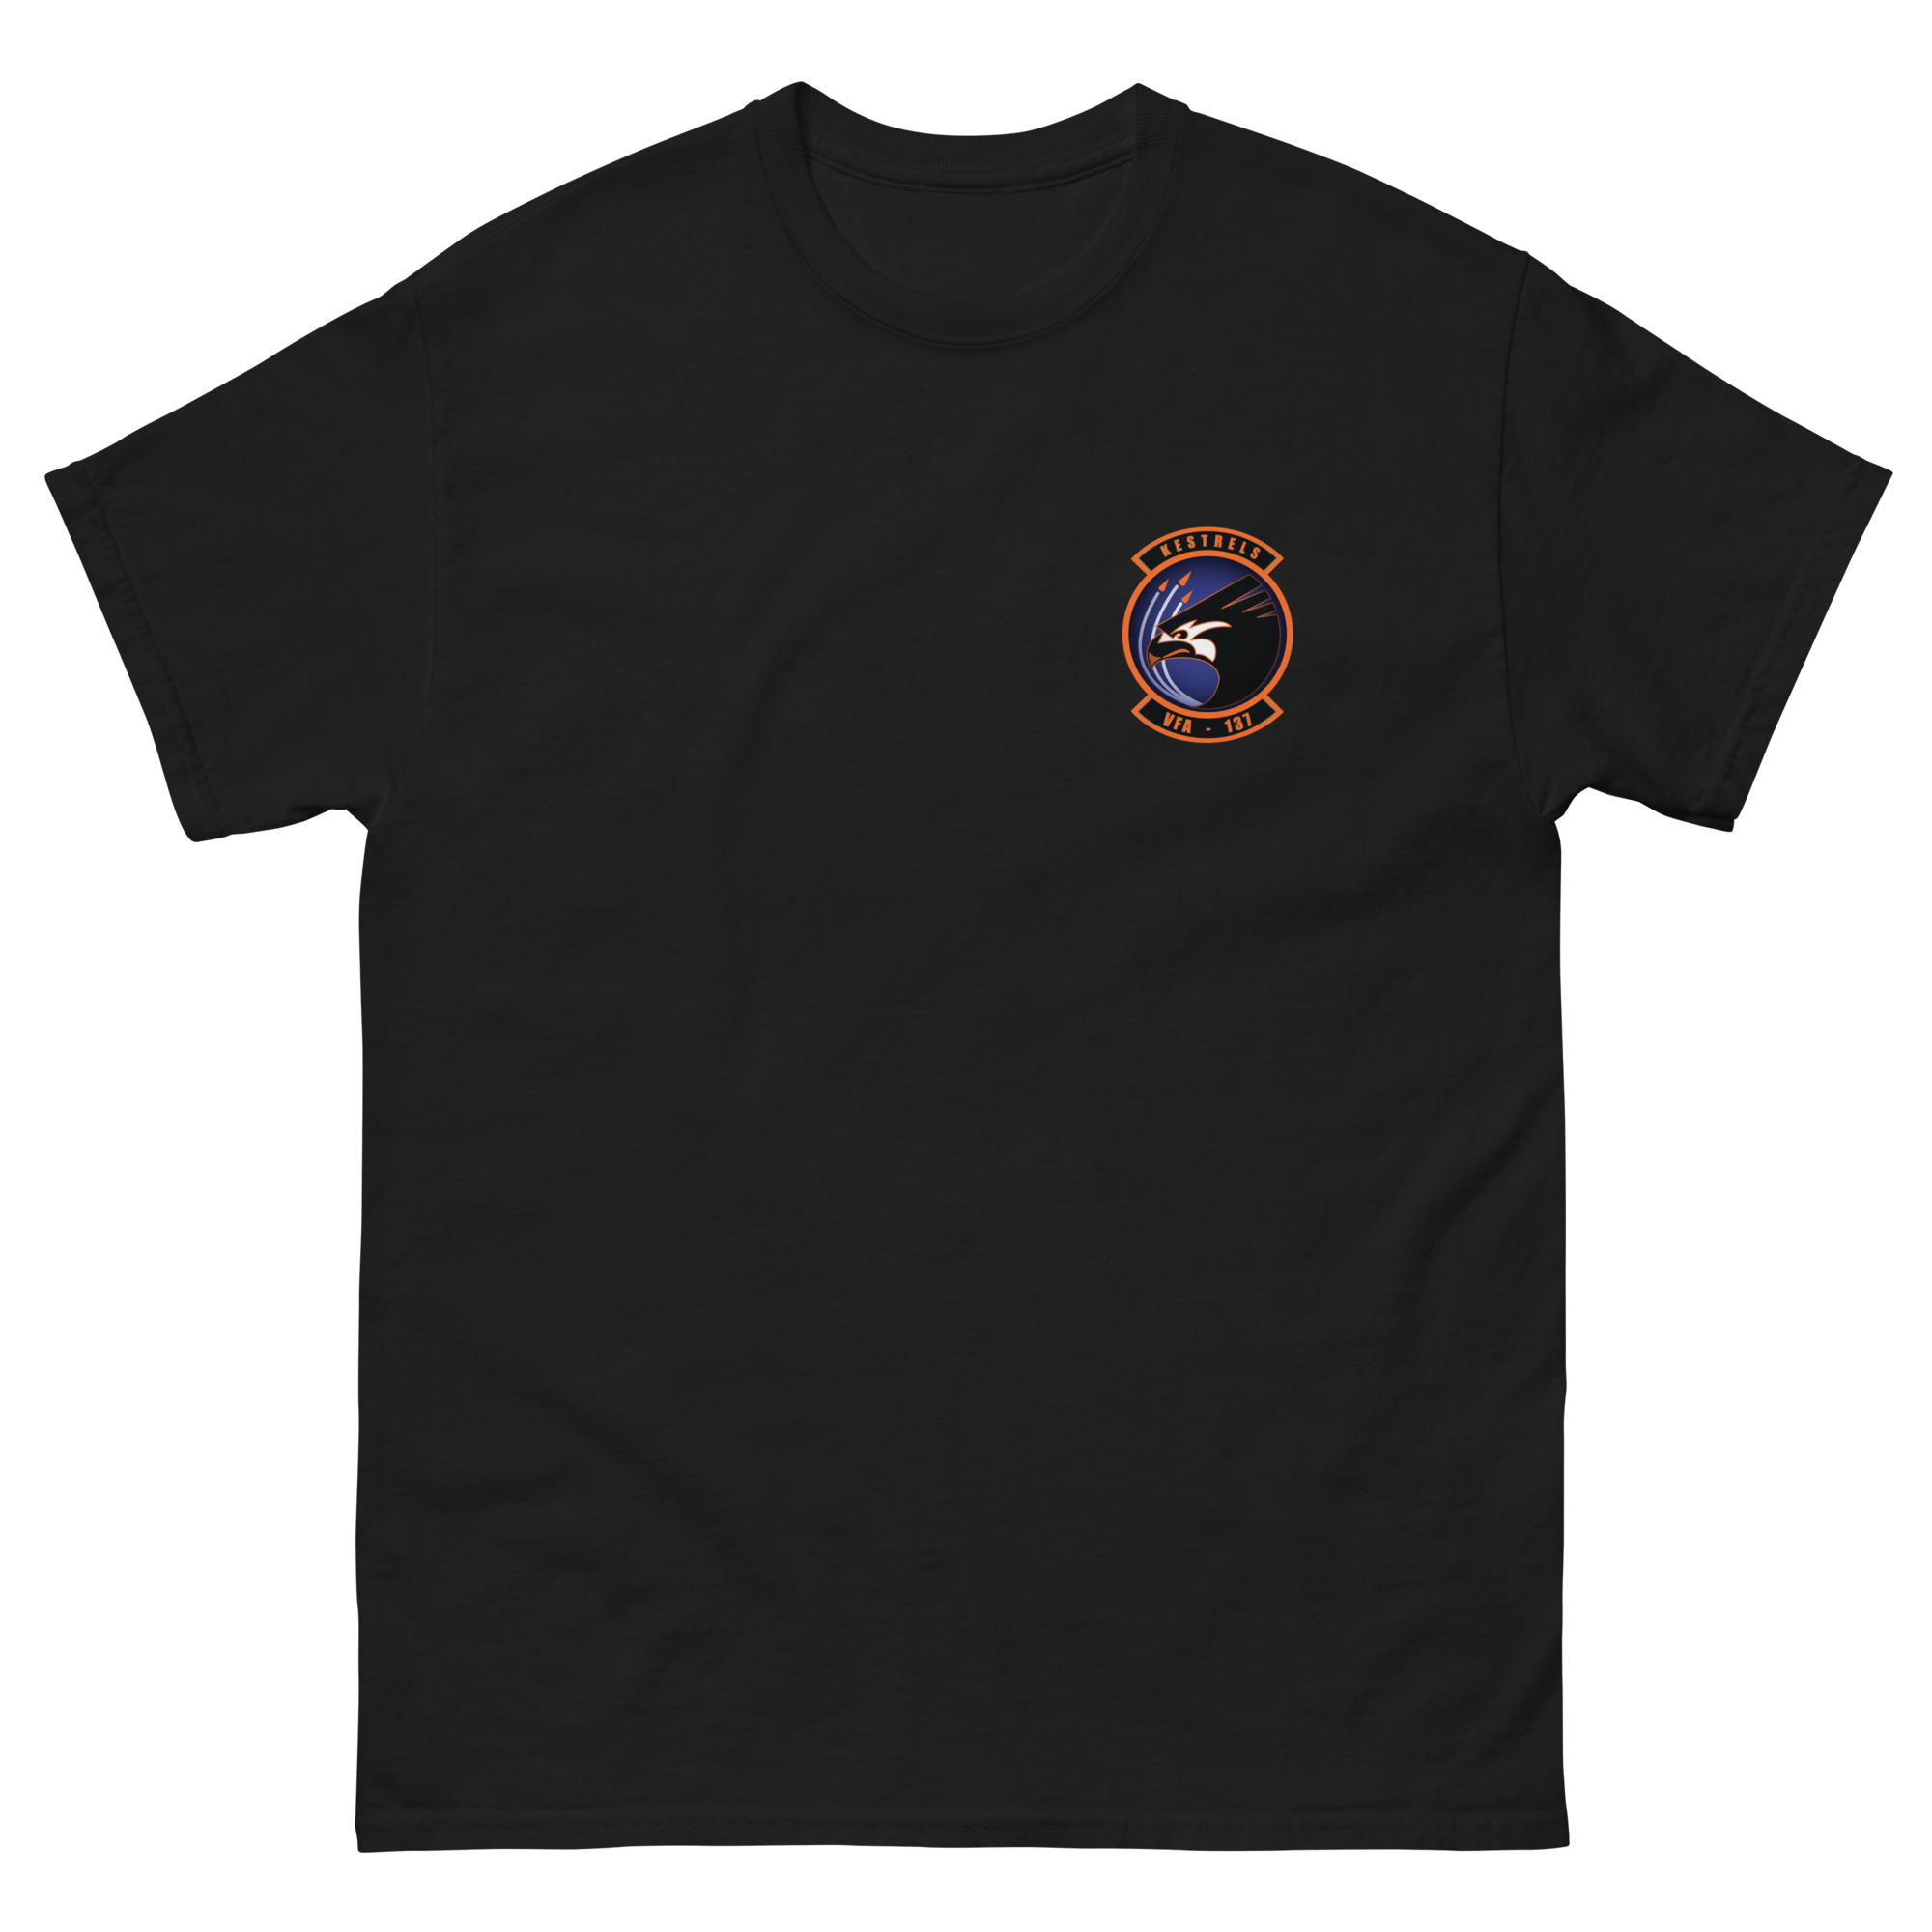 VFA-137 Kestrels Squadron Crest T-Shirt